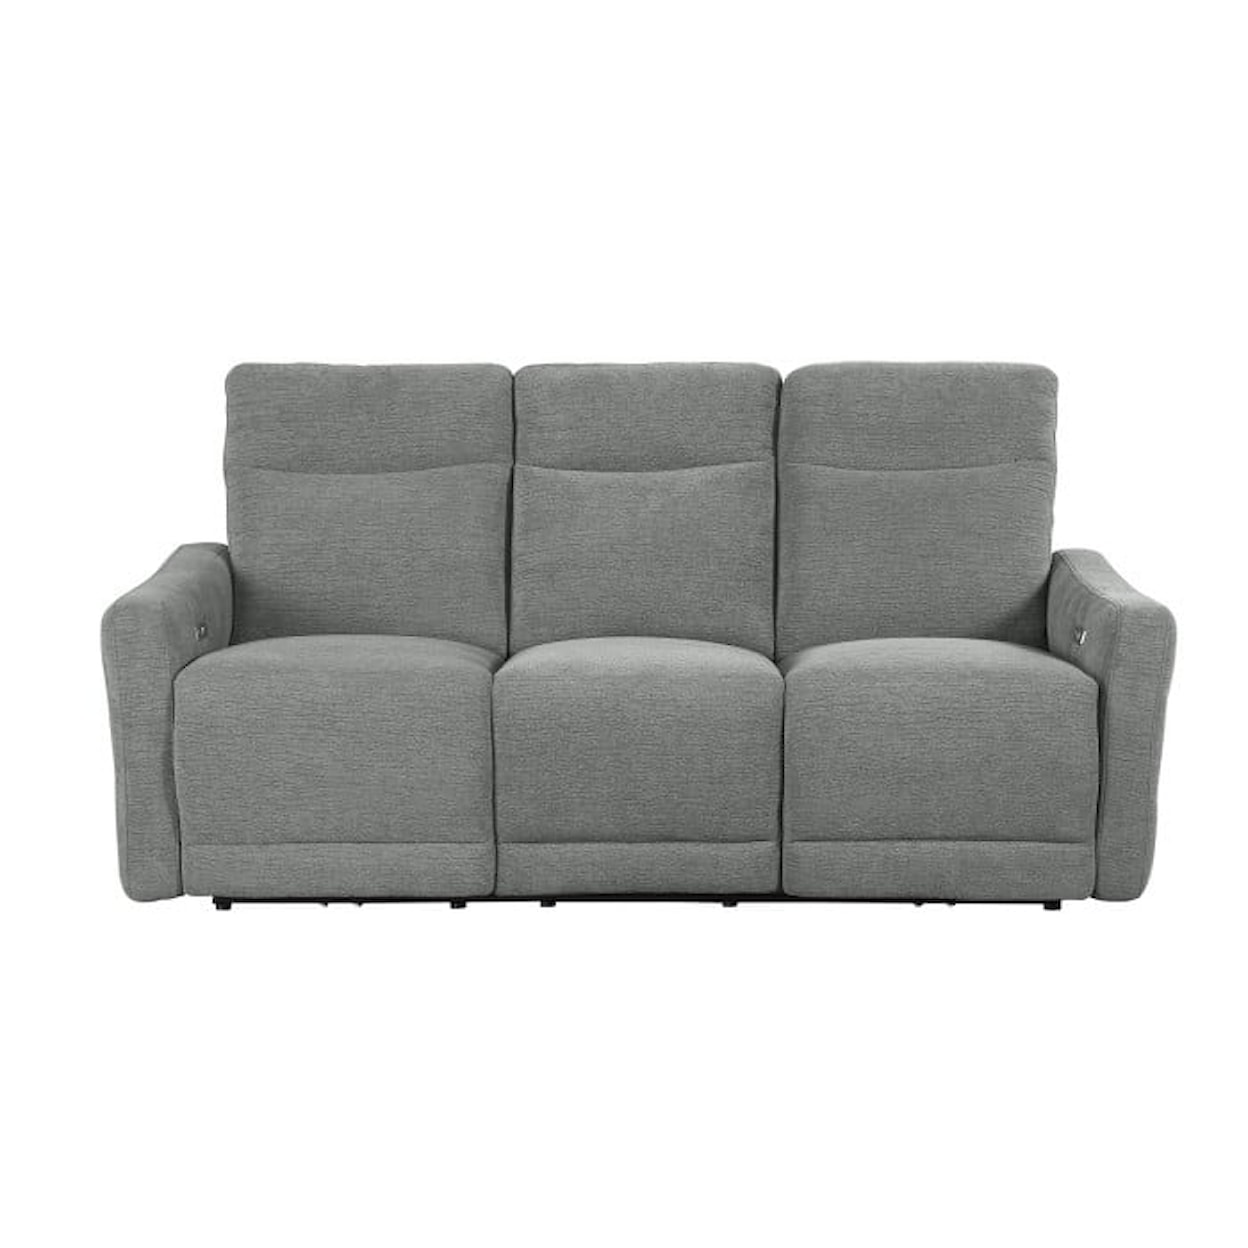 Homelegance Edition Lay Flat Reclining Sofa